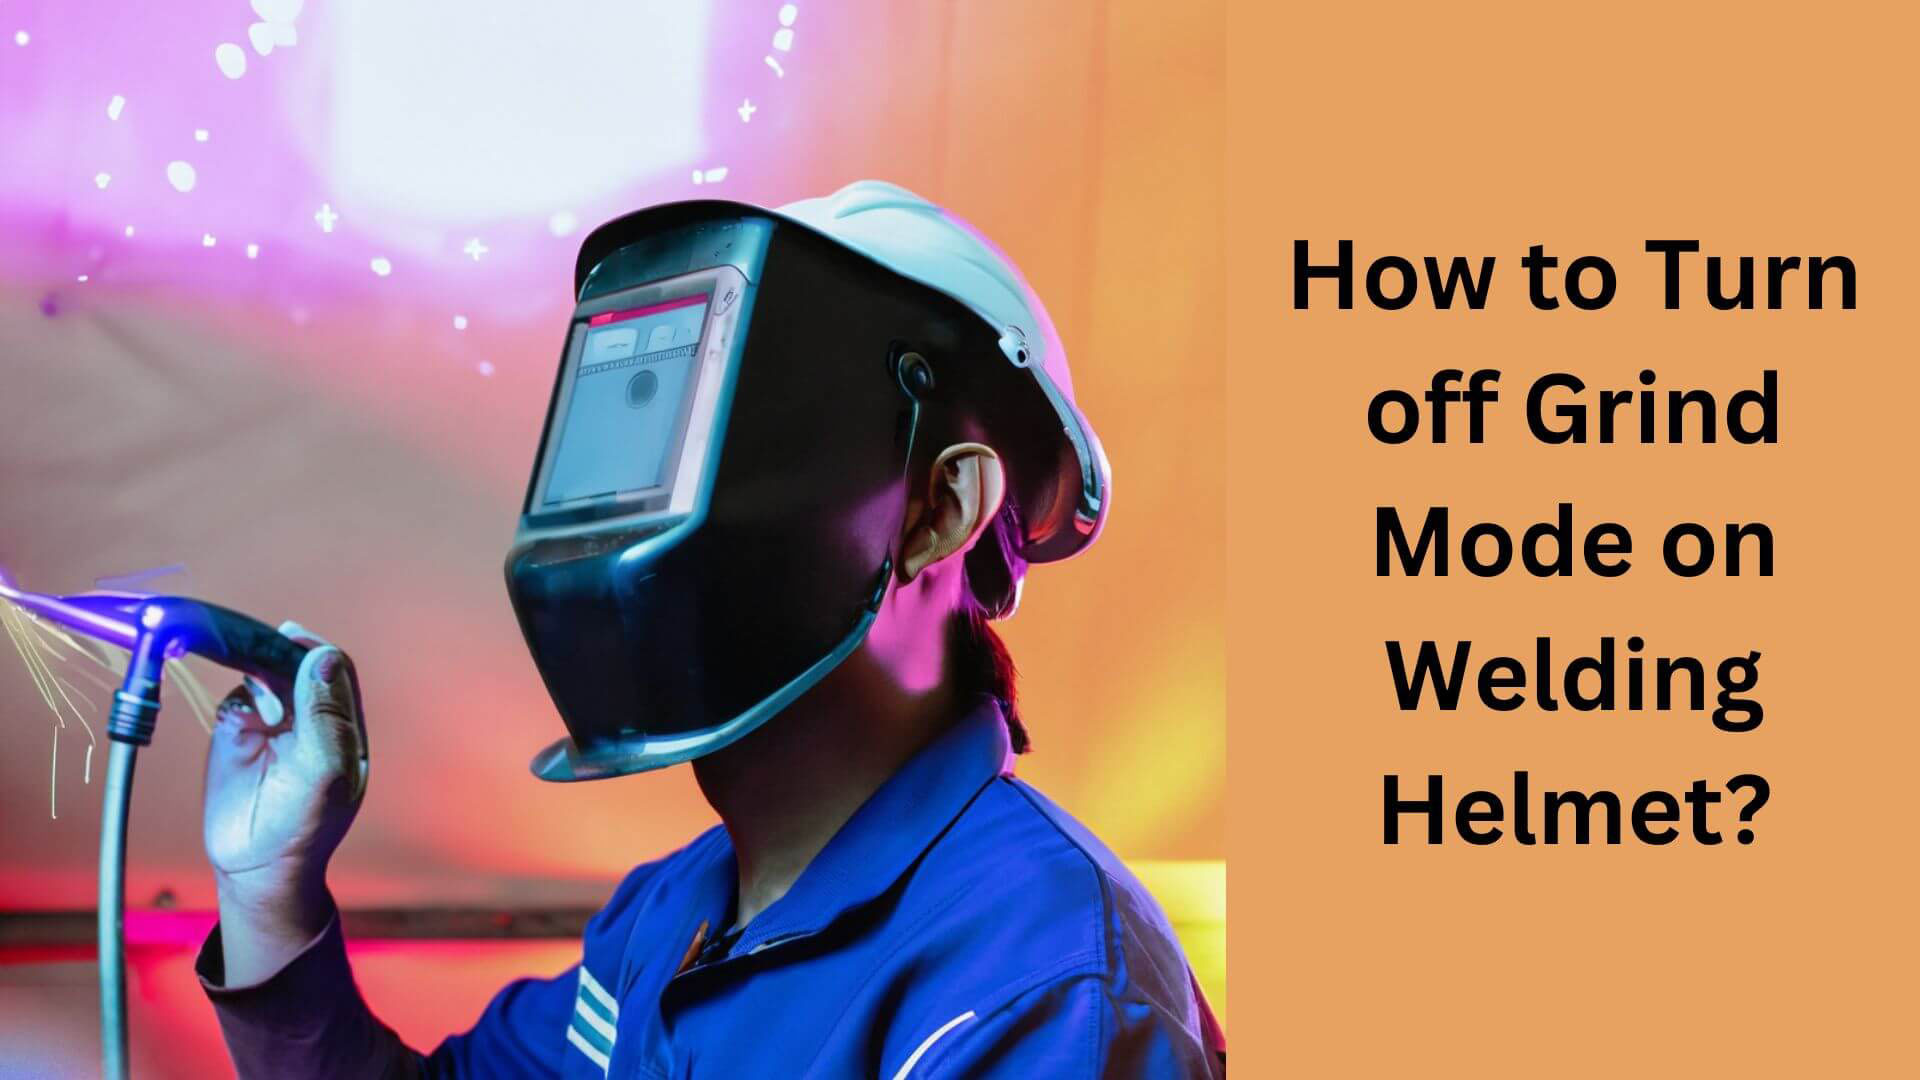 How to Turn off Grind Mode on Welding Helmet?